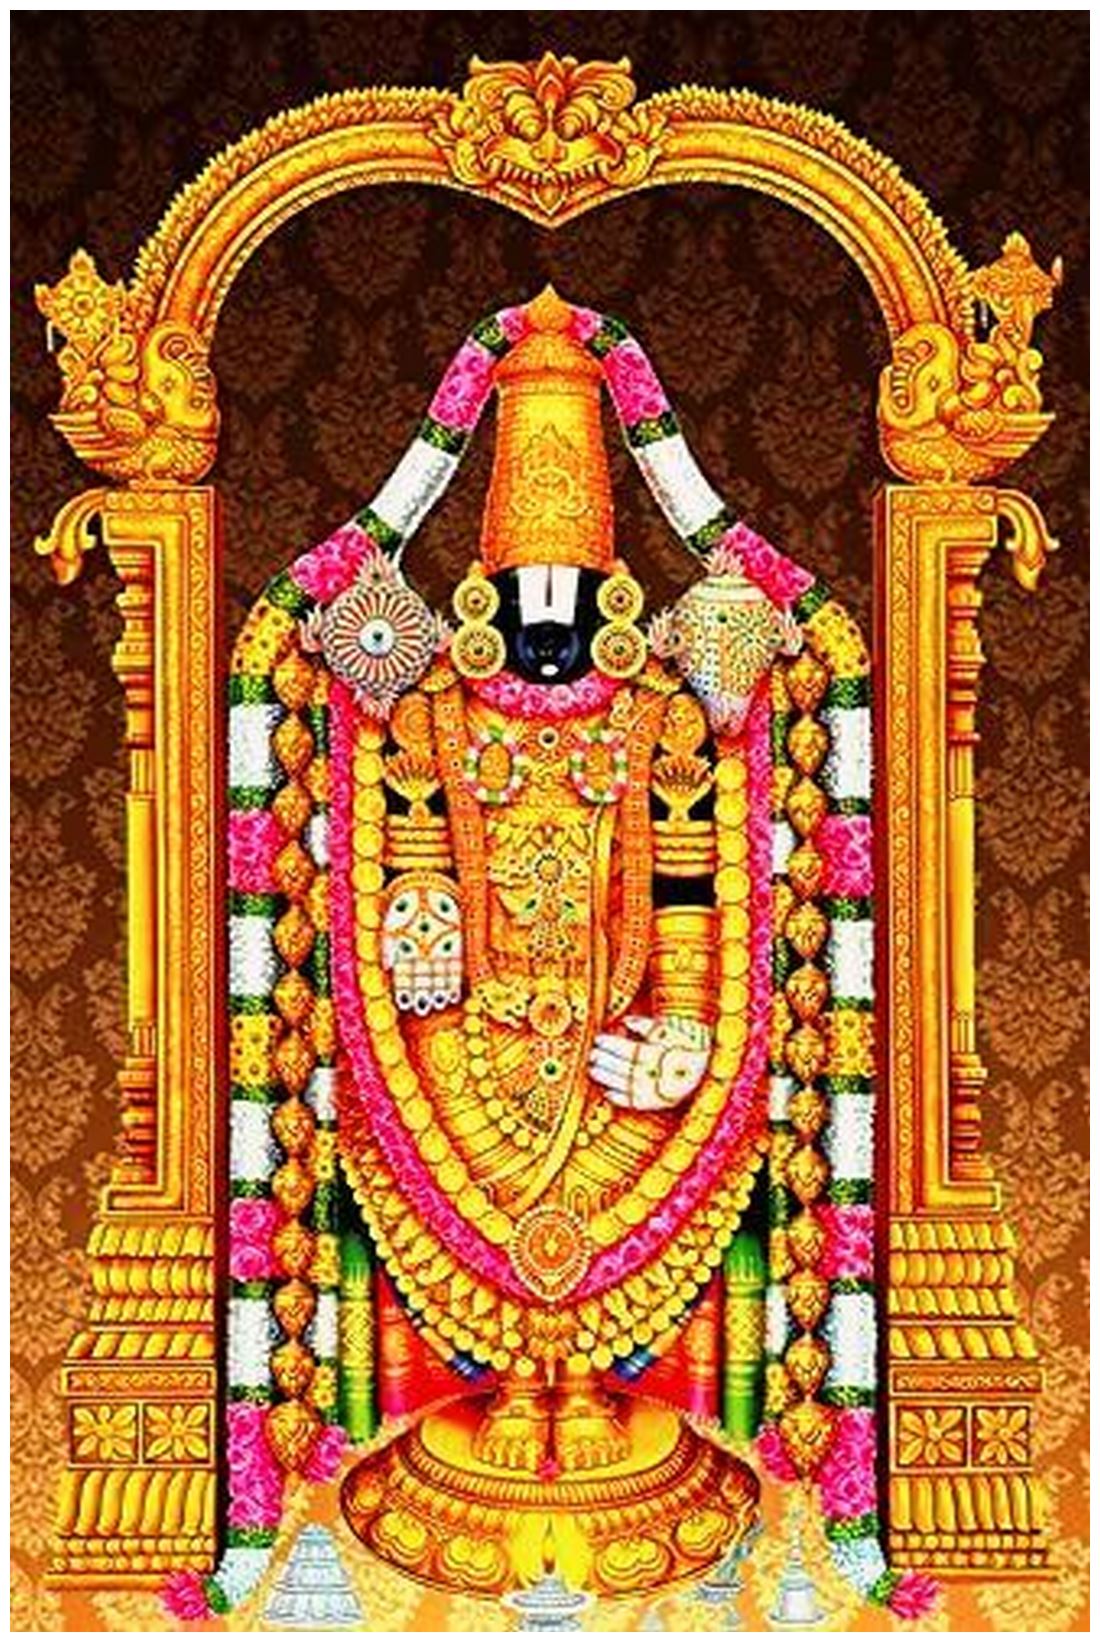 Lord venkateswara images / hindu god images HD 1080P download.